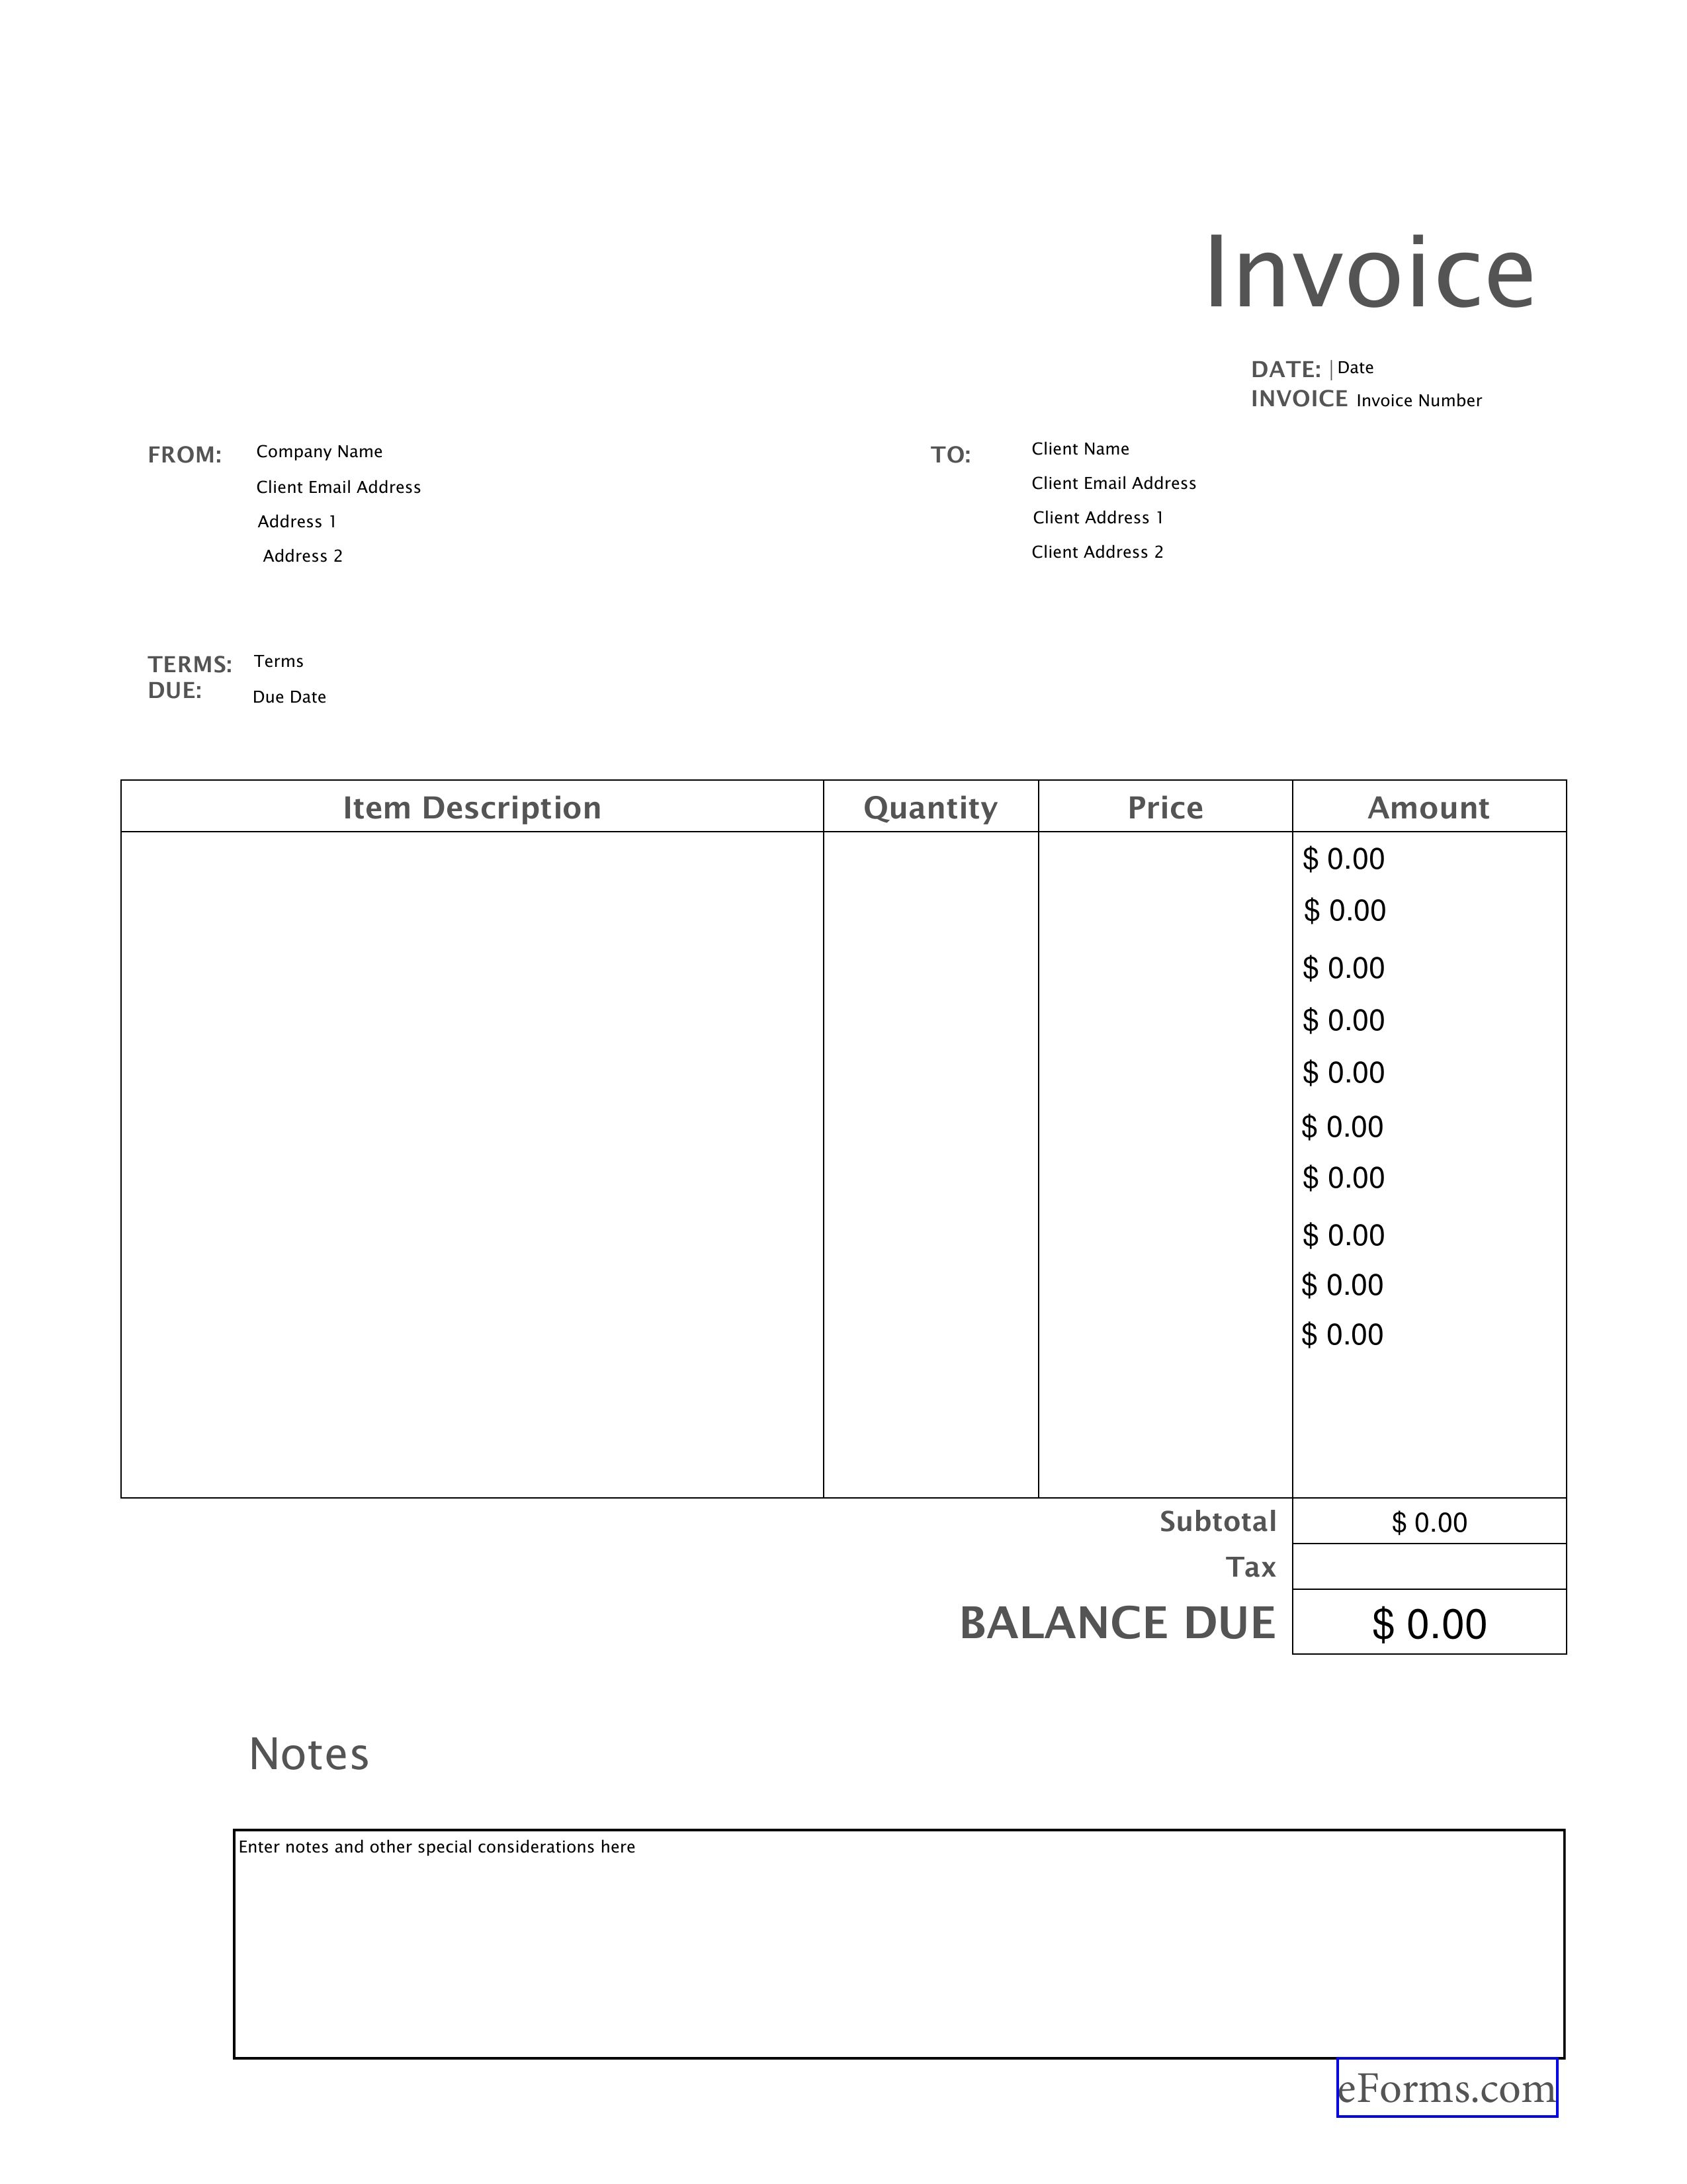 free blank invoice templates pdf in 2020 invoice blank billing invoice template free download editable